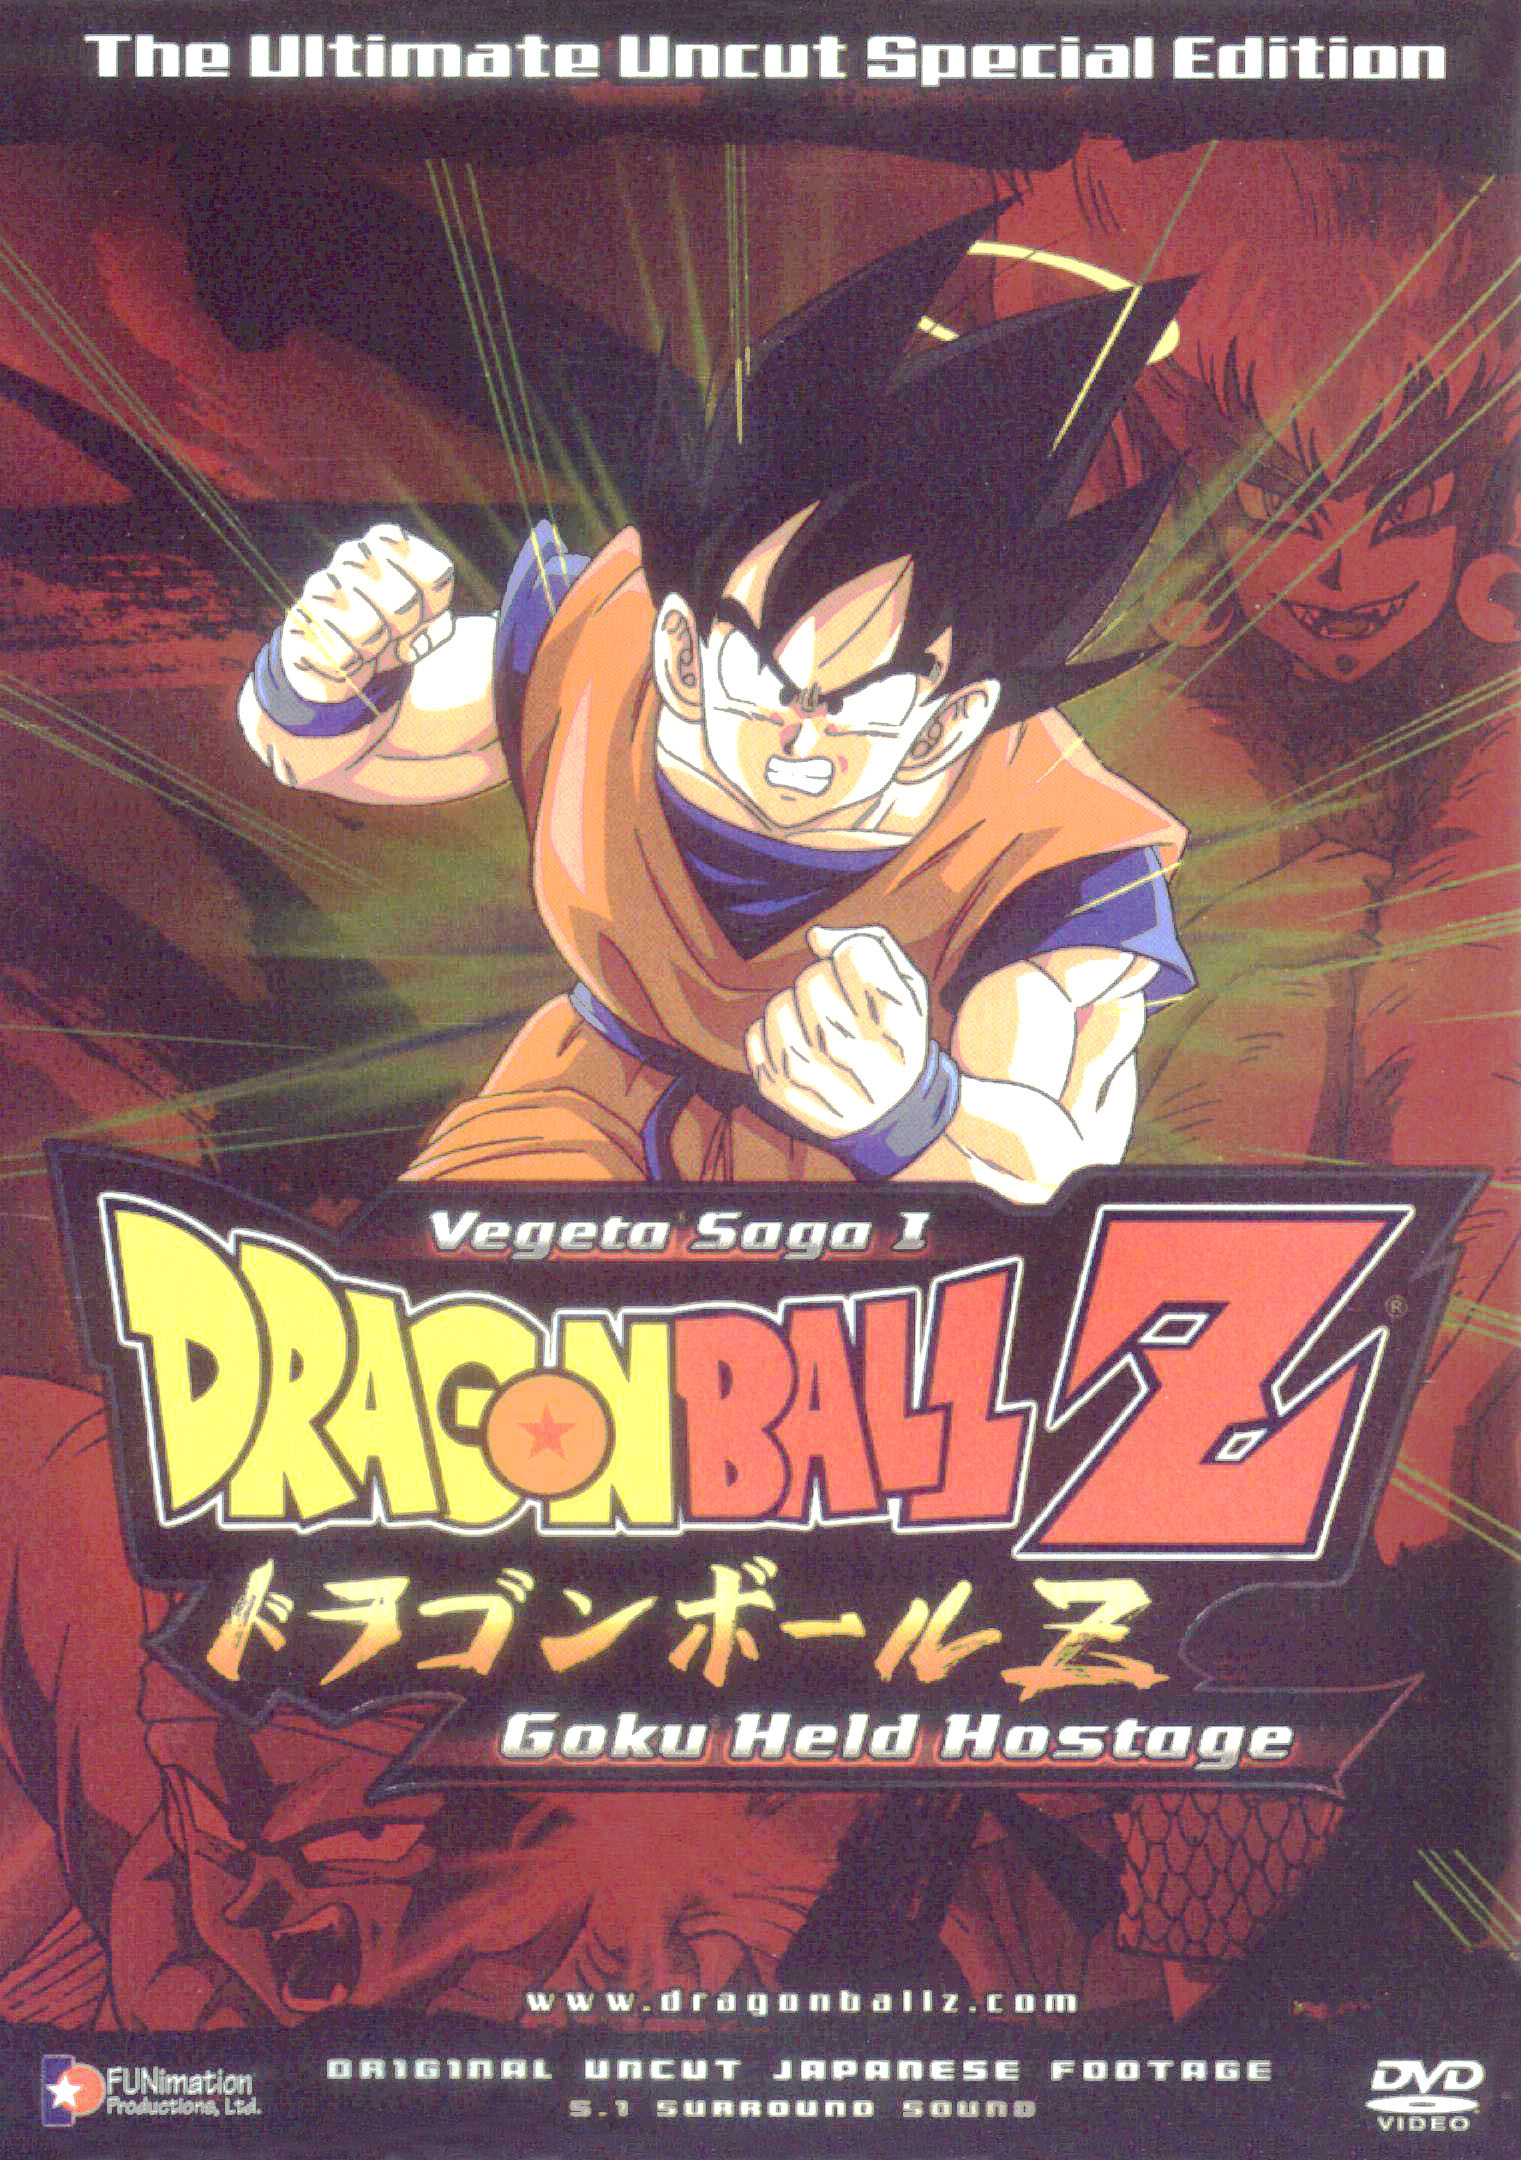 DVD - Dragon Ball Saga of Goku Eps 1-13 Plus Feature Film - Great Condition